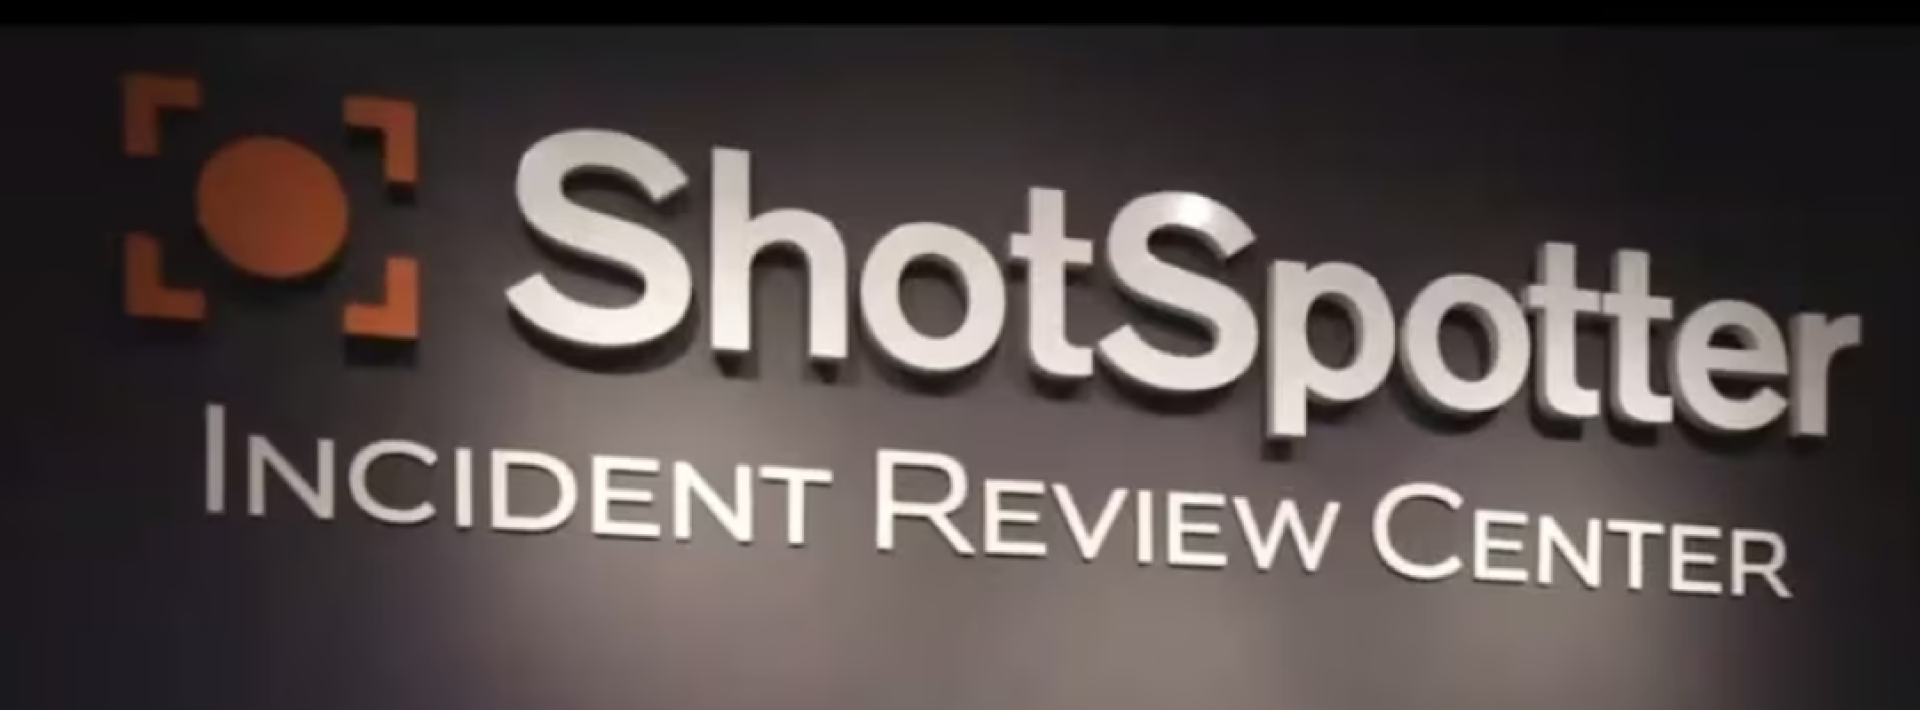 shotspotter logo